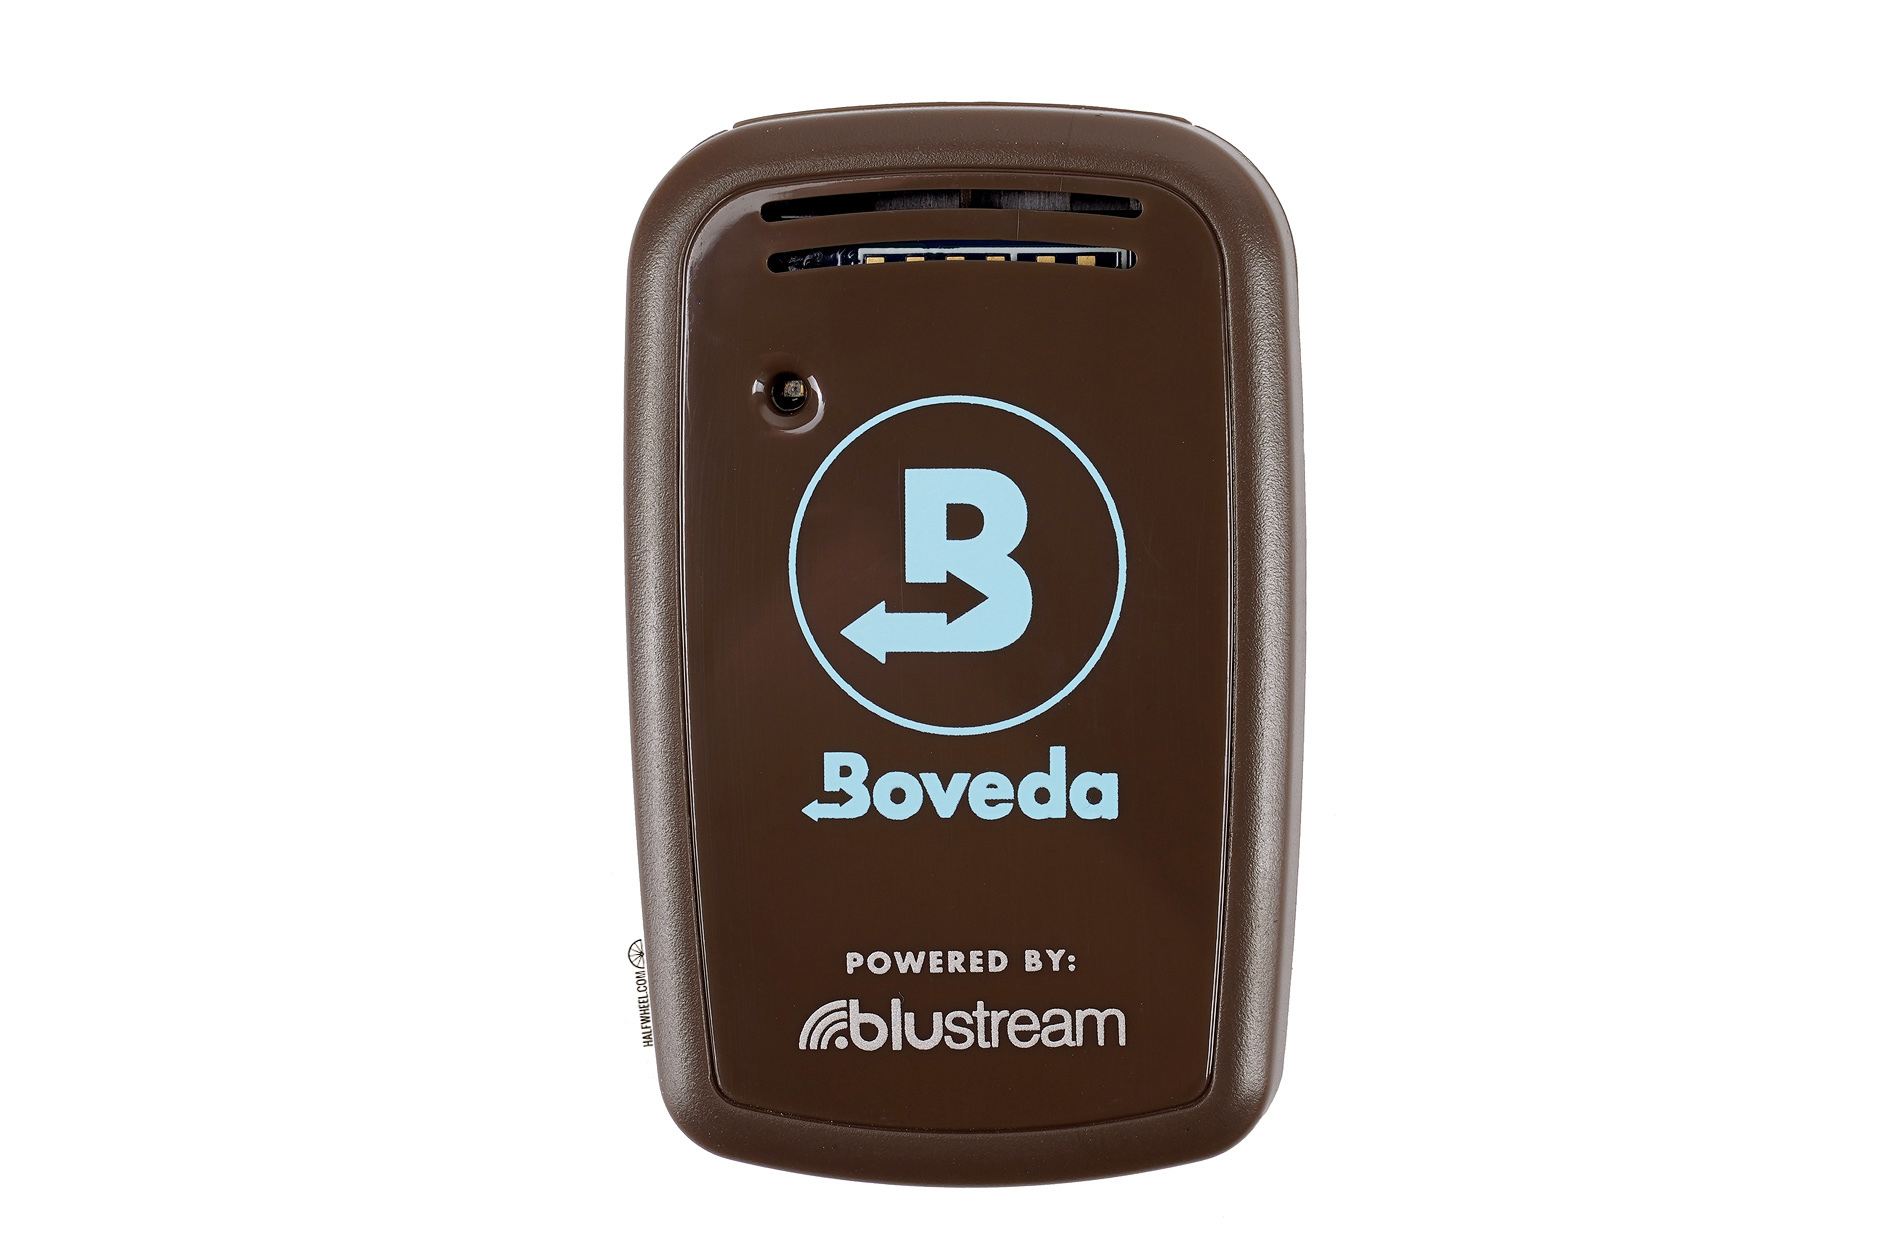 https://halfwheel.com/wp-content/uploads/2018/08/Boveda-Smart-Sensor-3.jpg